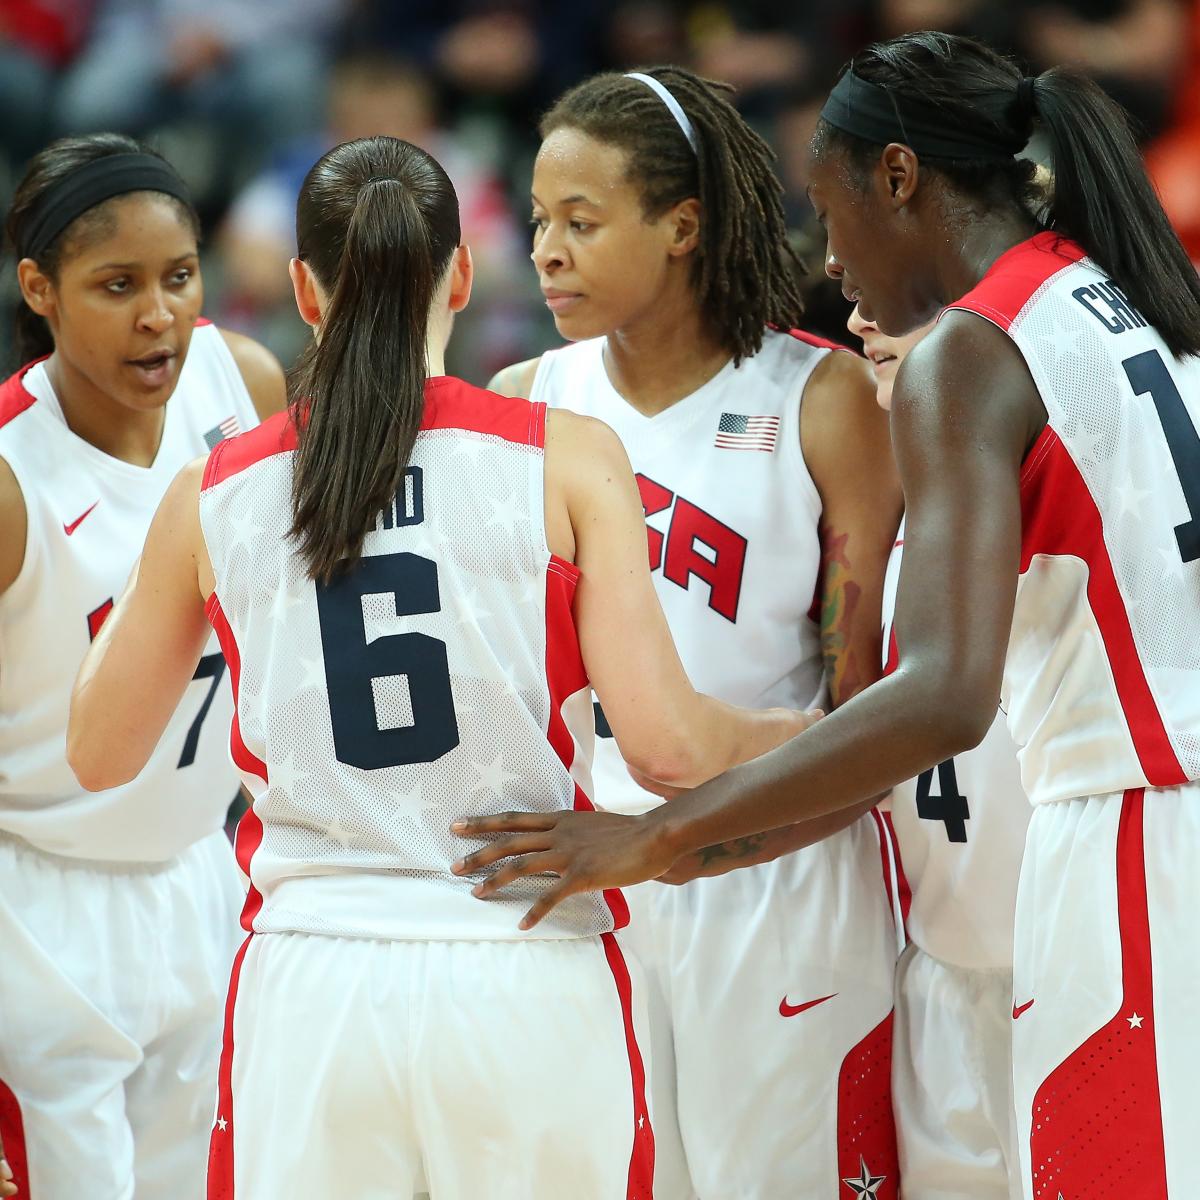 USA vs. Czech Republic Women's Basketball: Live Score, Stats & Analysis